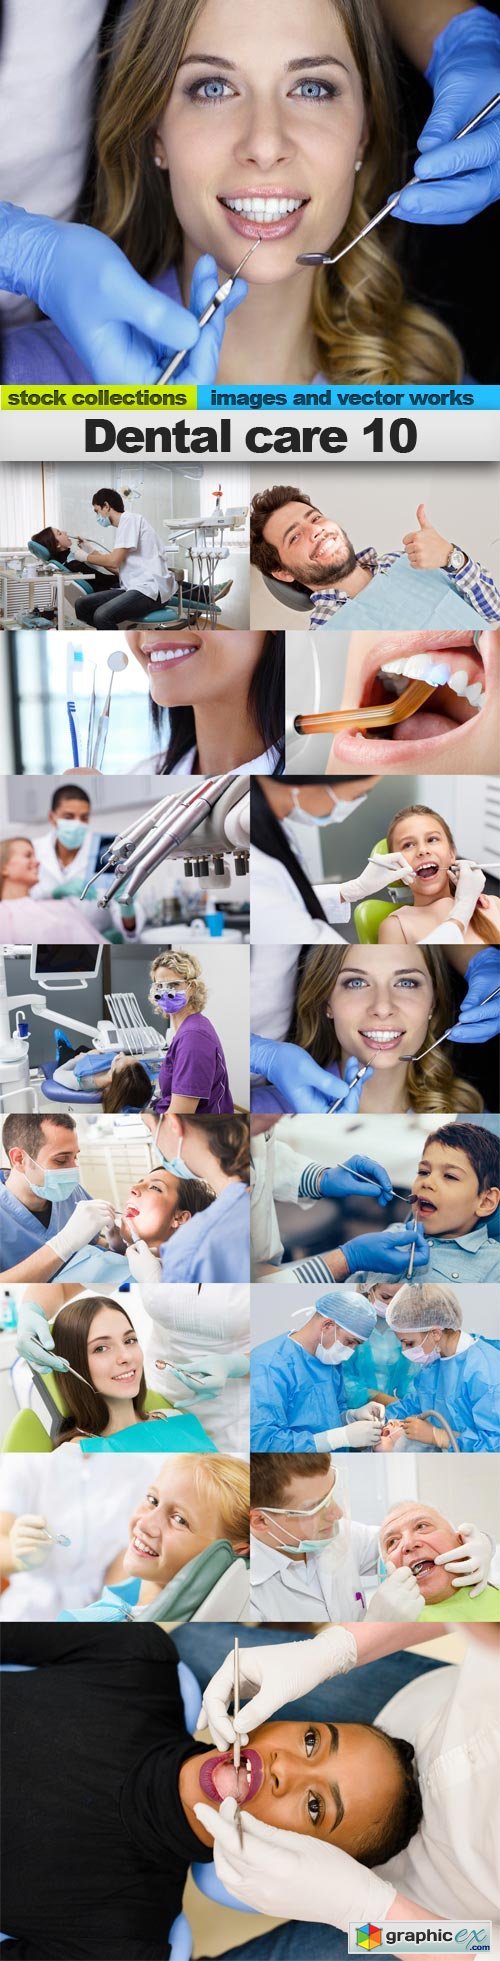 Dental care 10, 15 x UHQ JPEG